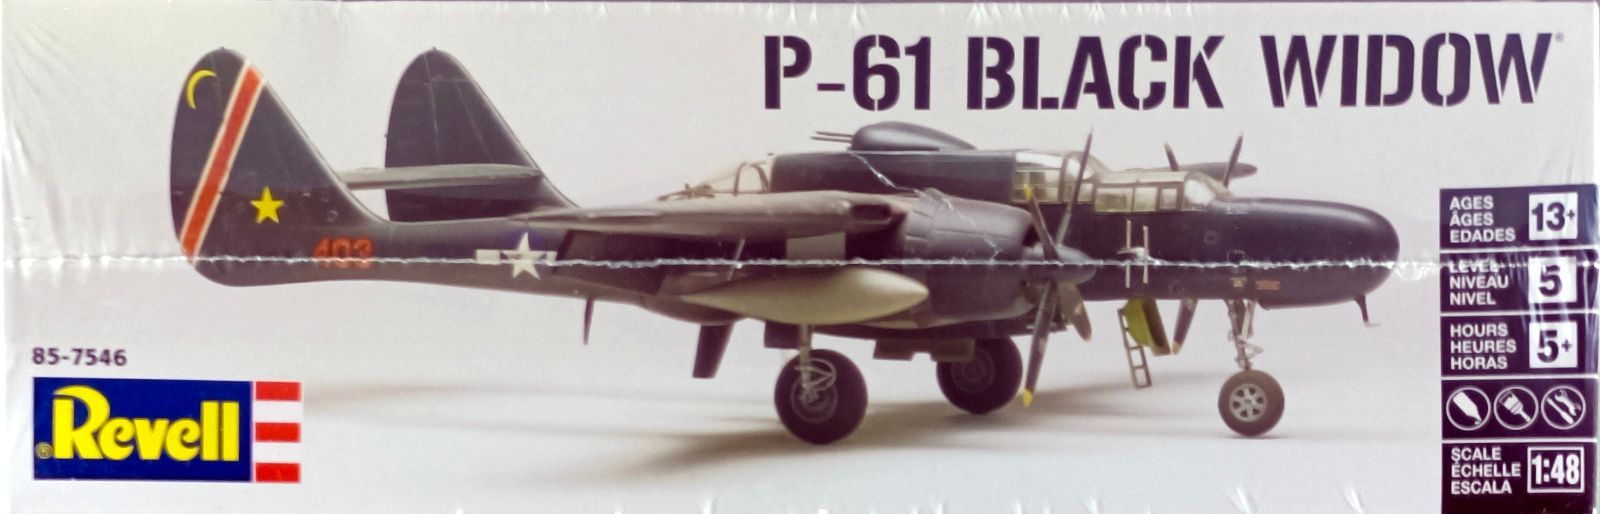 P-61 ブラックウィドウ 1/48 アメリカレベル - メルカリ